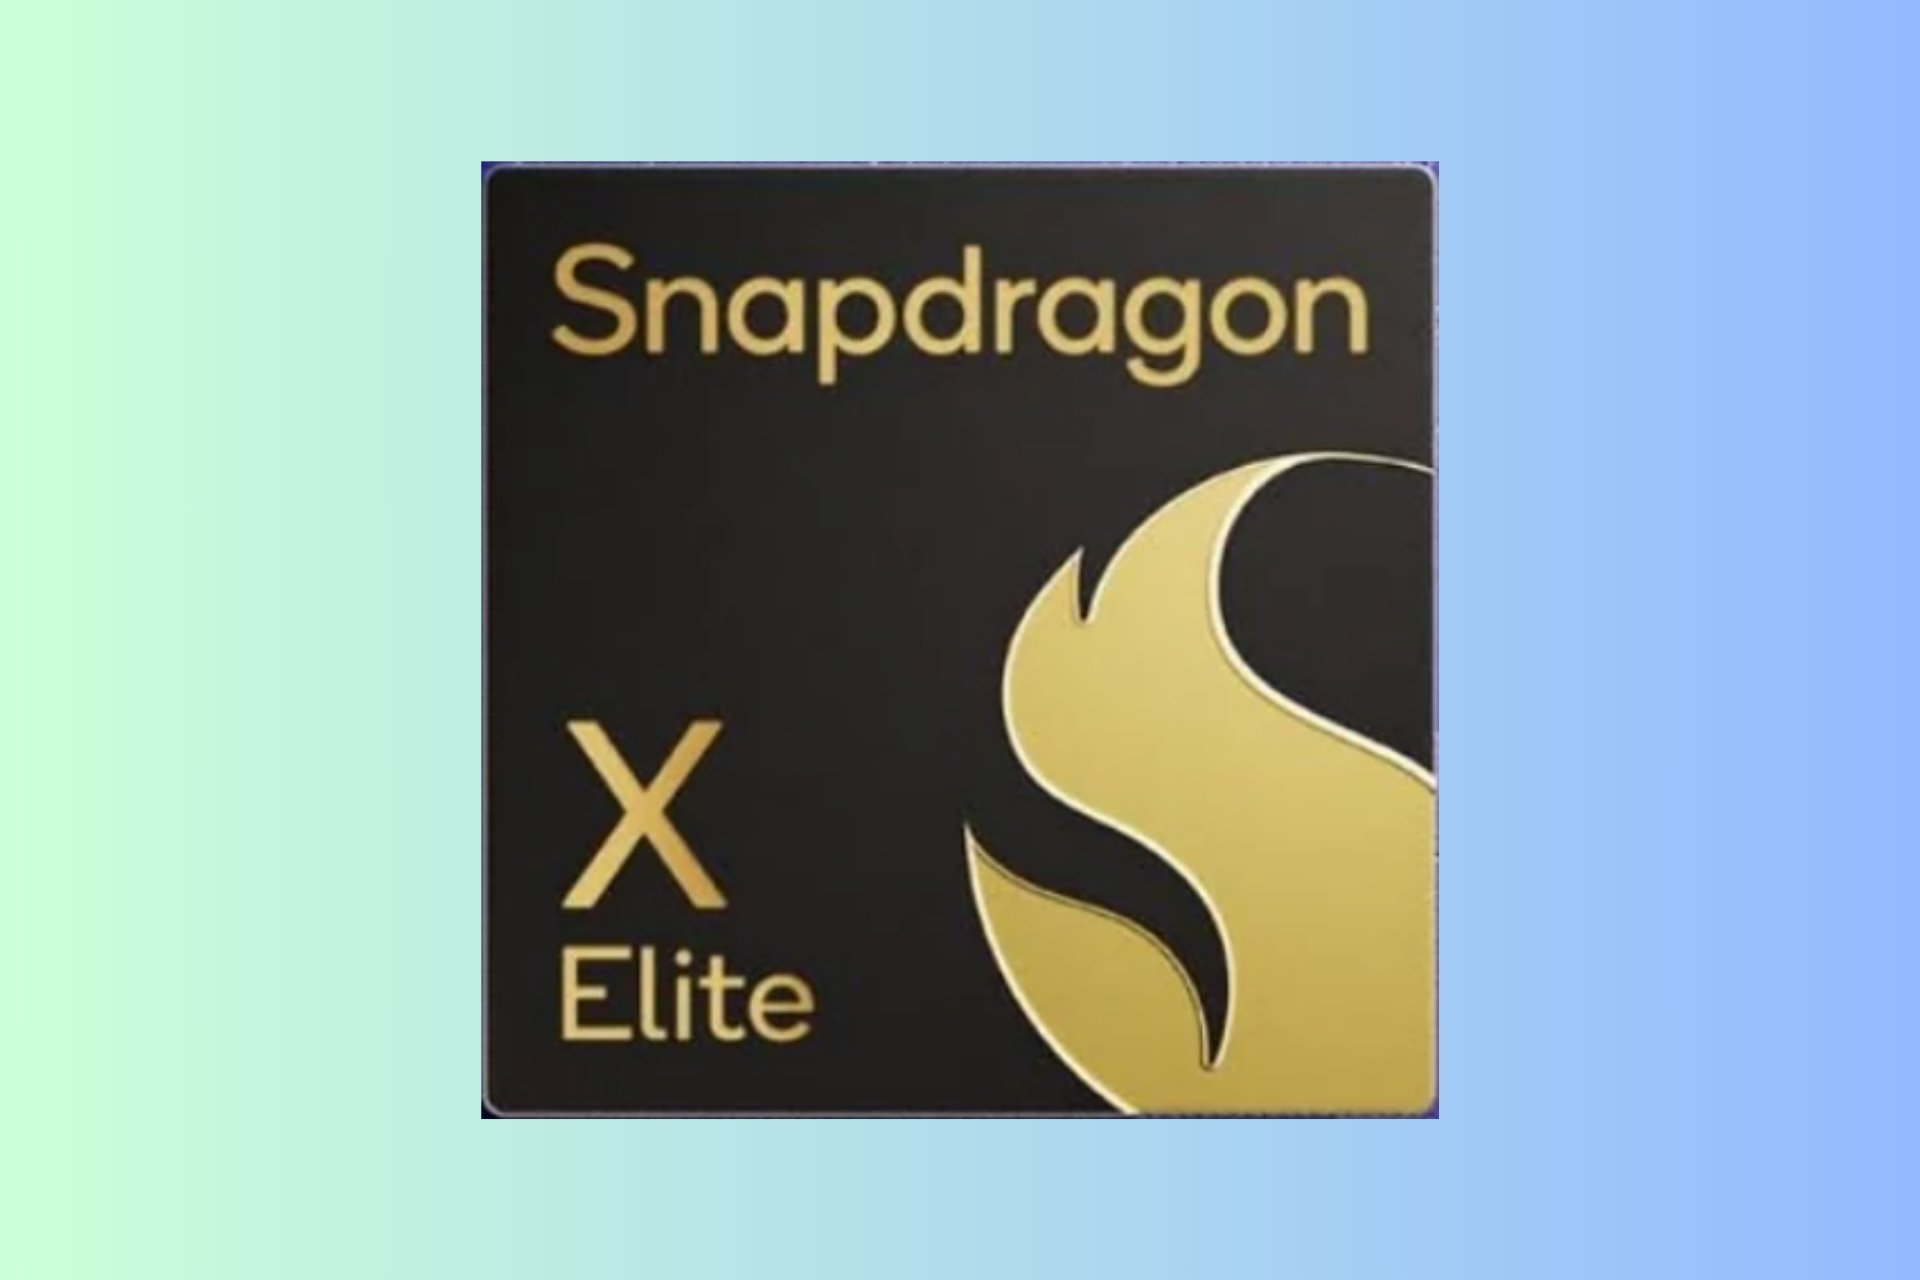 Qualcomm Snapdragon X Elite versions